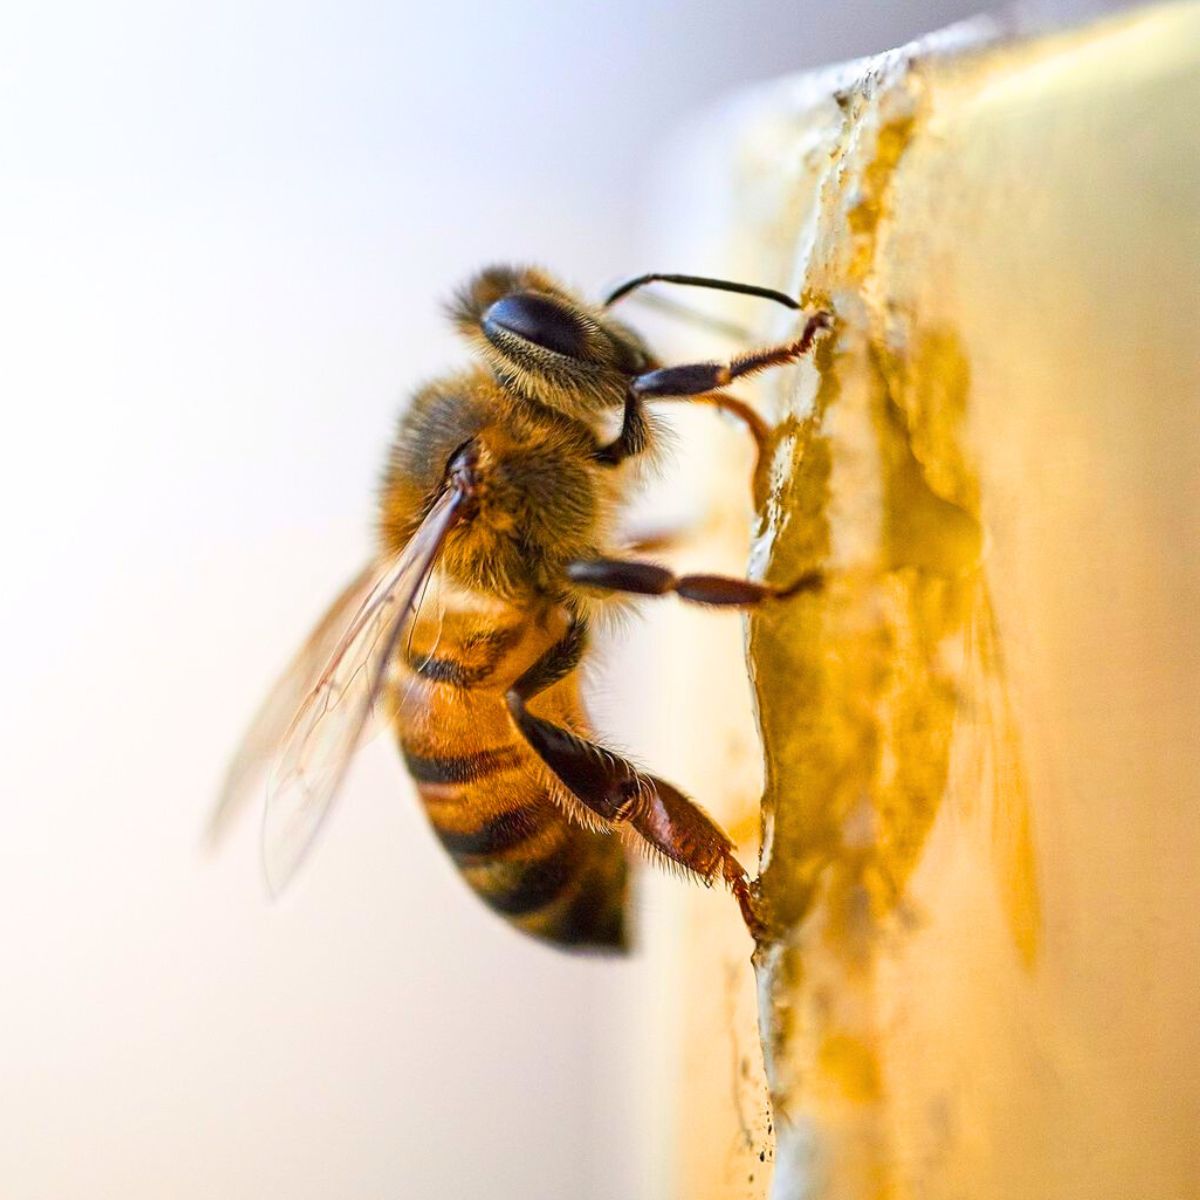 A bee creating honey